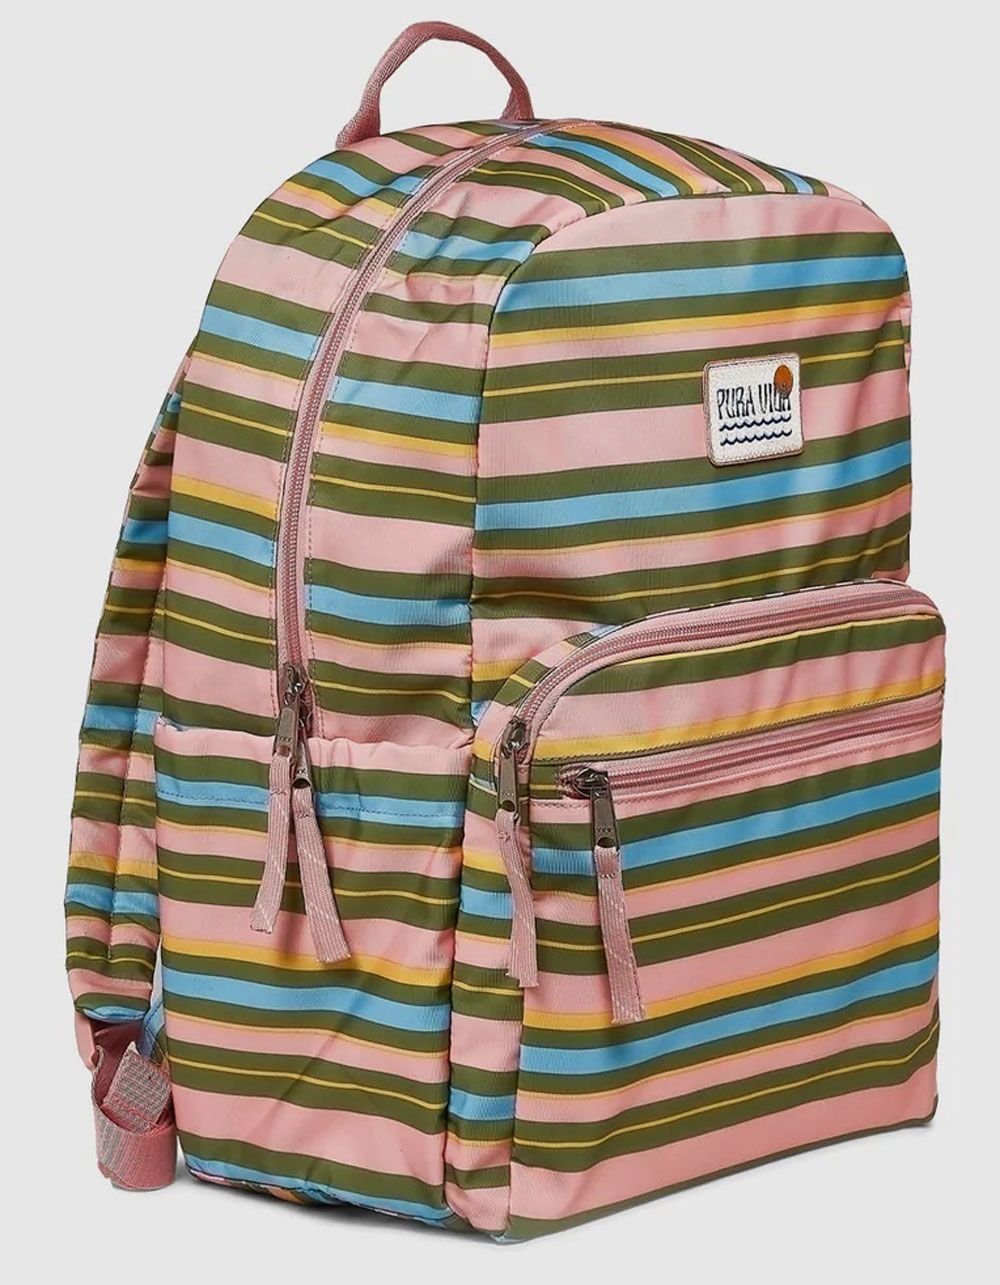 PURA VIDA Stripe Backpack | Tillys